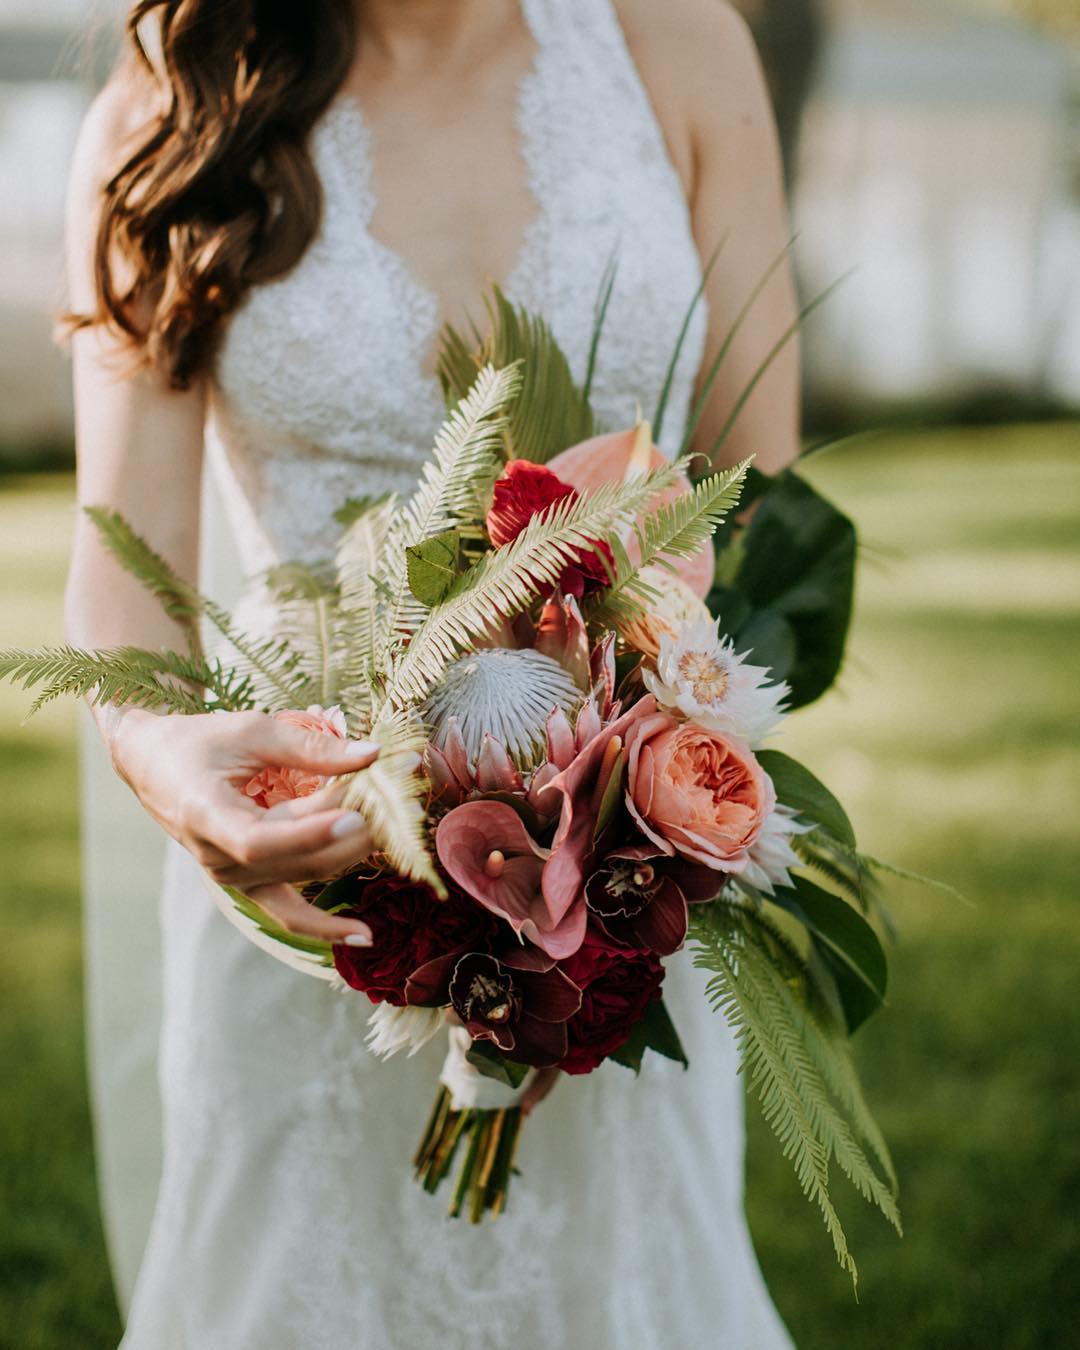 {tropical•boho}
photo | @ramblefreehannah 
styling/coordination | @eventsbysorrell .
.
#bride #bouquet #brideflowers #gorgeous #boho #tropical #protea #ferns #roses #weddingflowers #weddingdesign #lotusfloraldesigns #weddingflorist